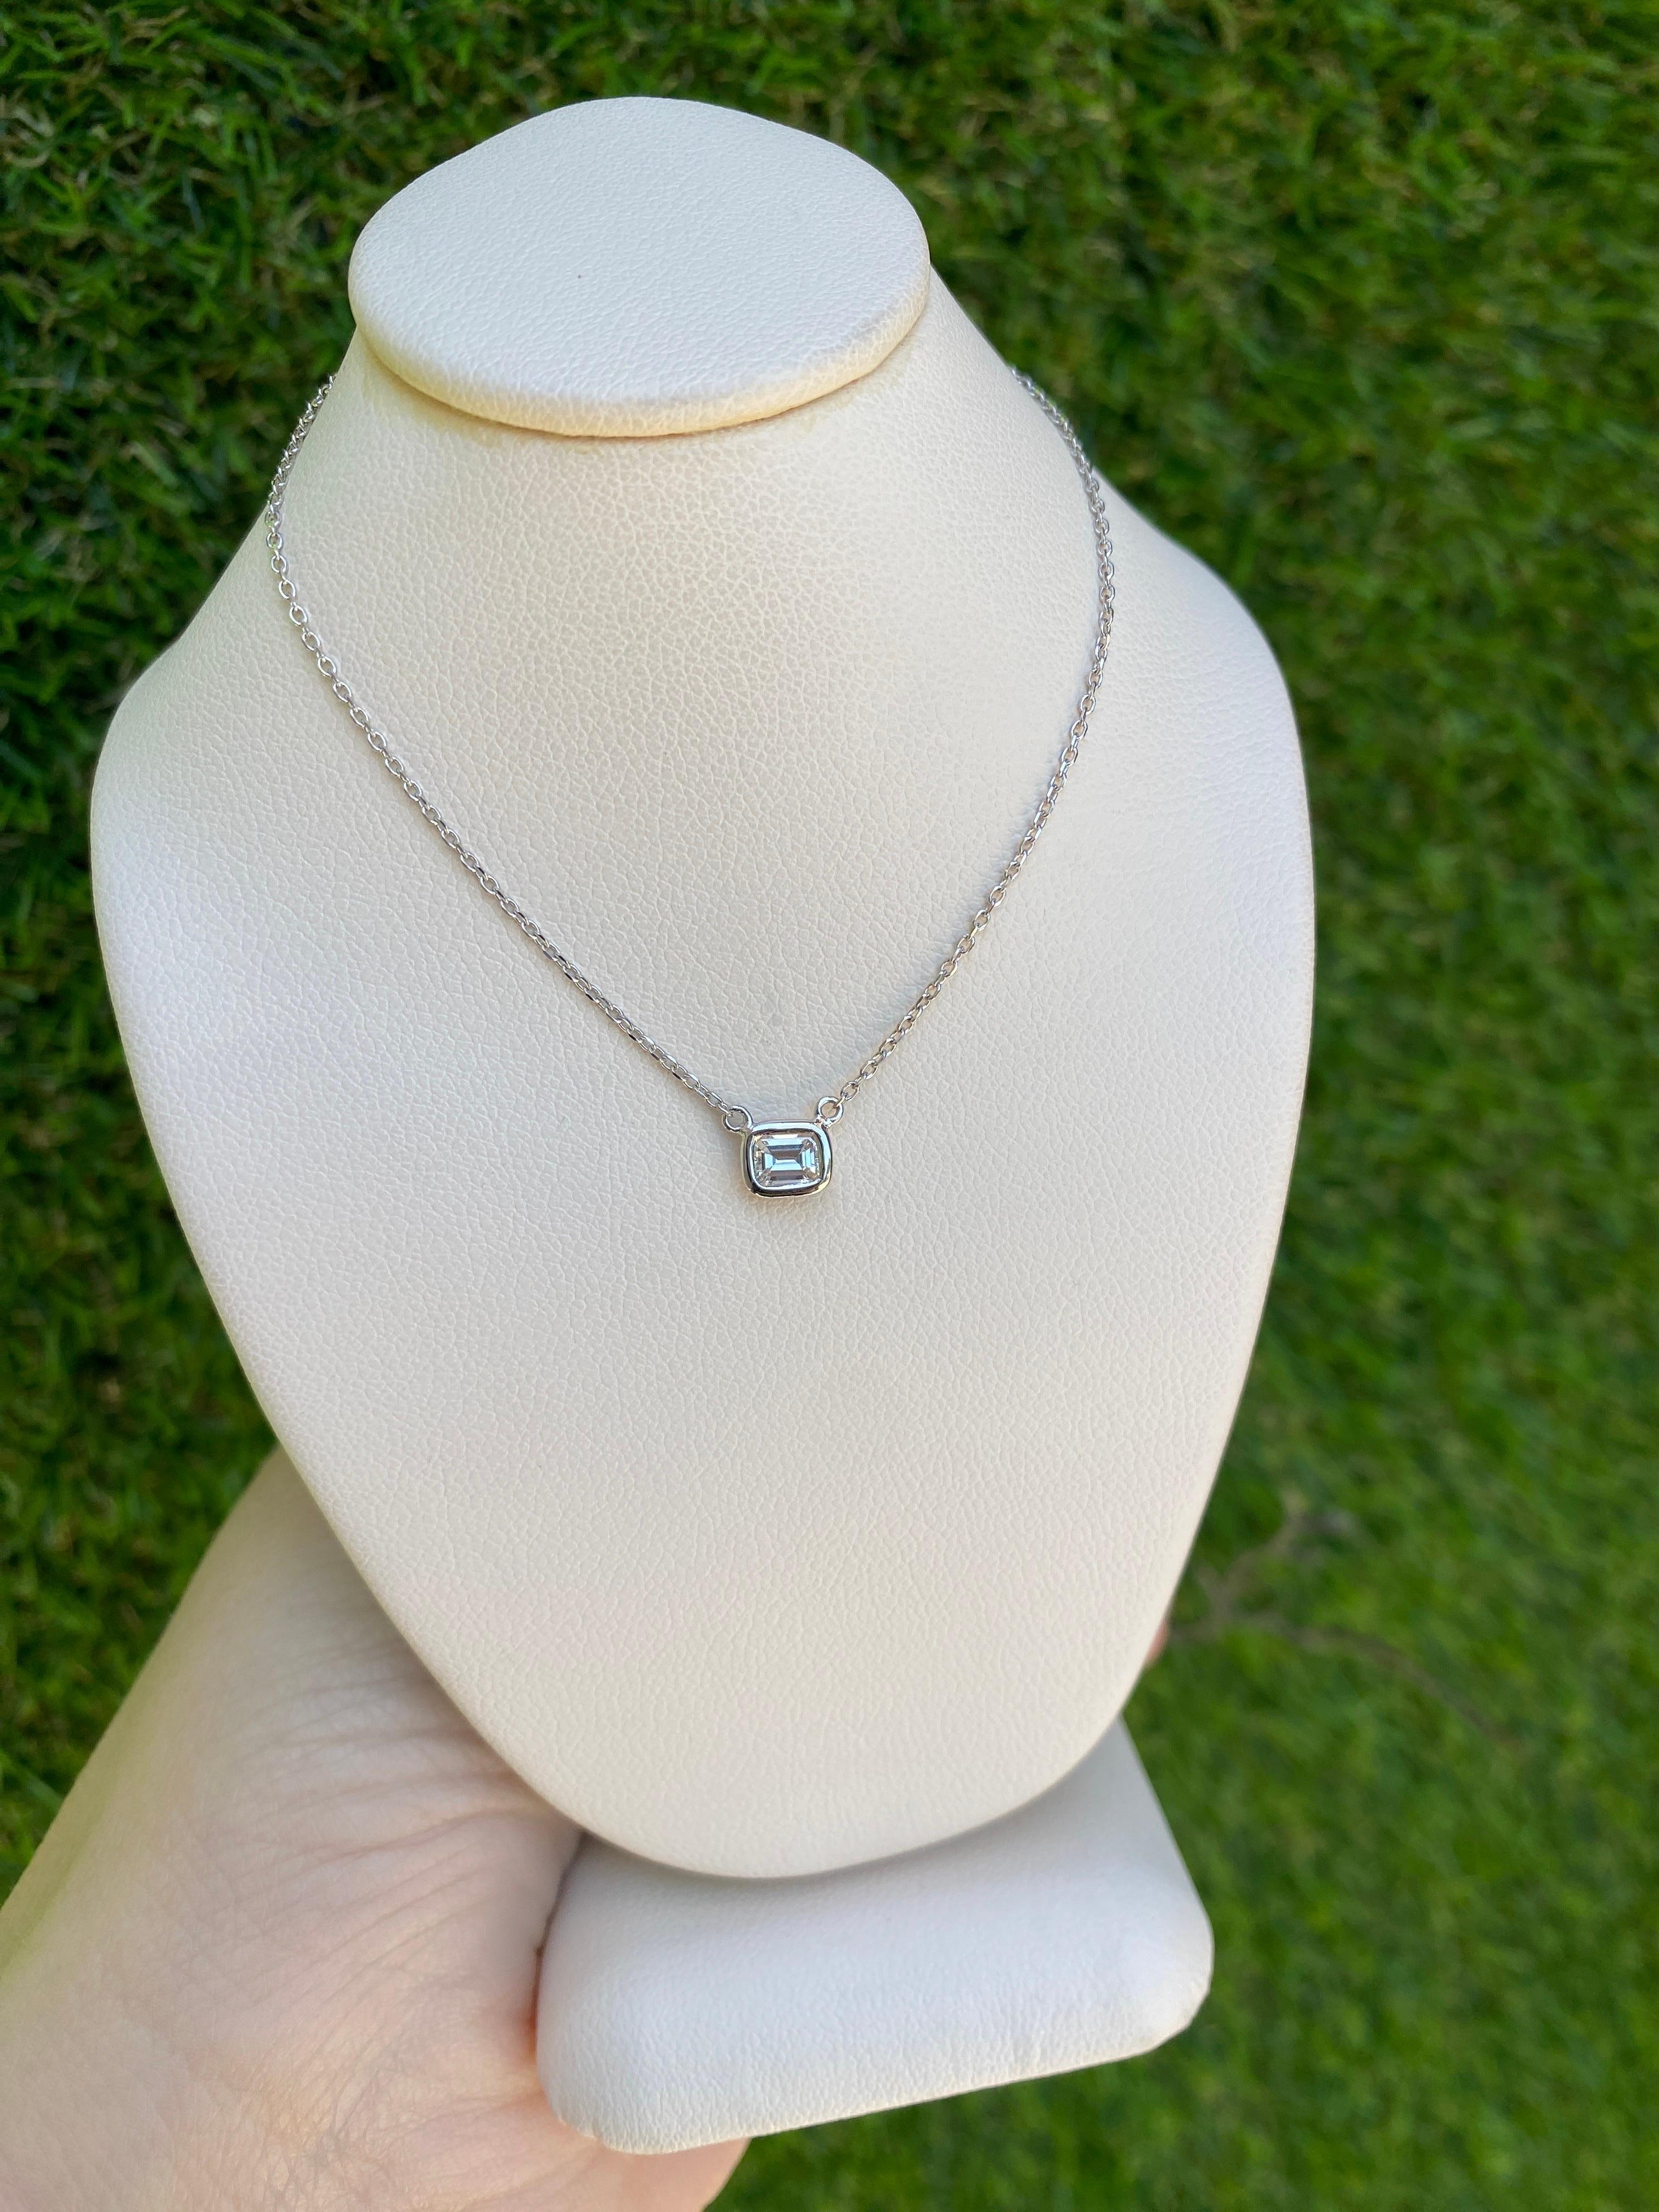 14k White Gold 0.23 Carat Natural Emerald Cut Diamond Pendant Necklace  For Sale 3